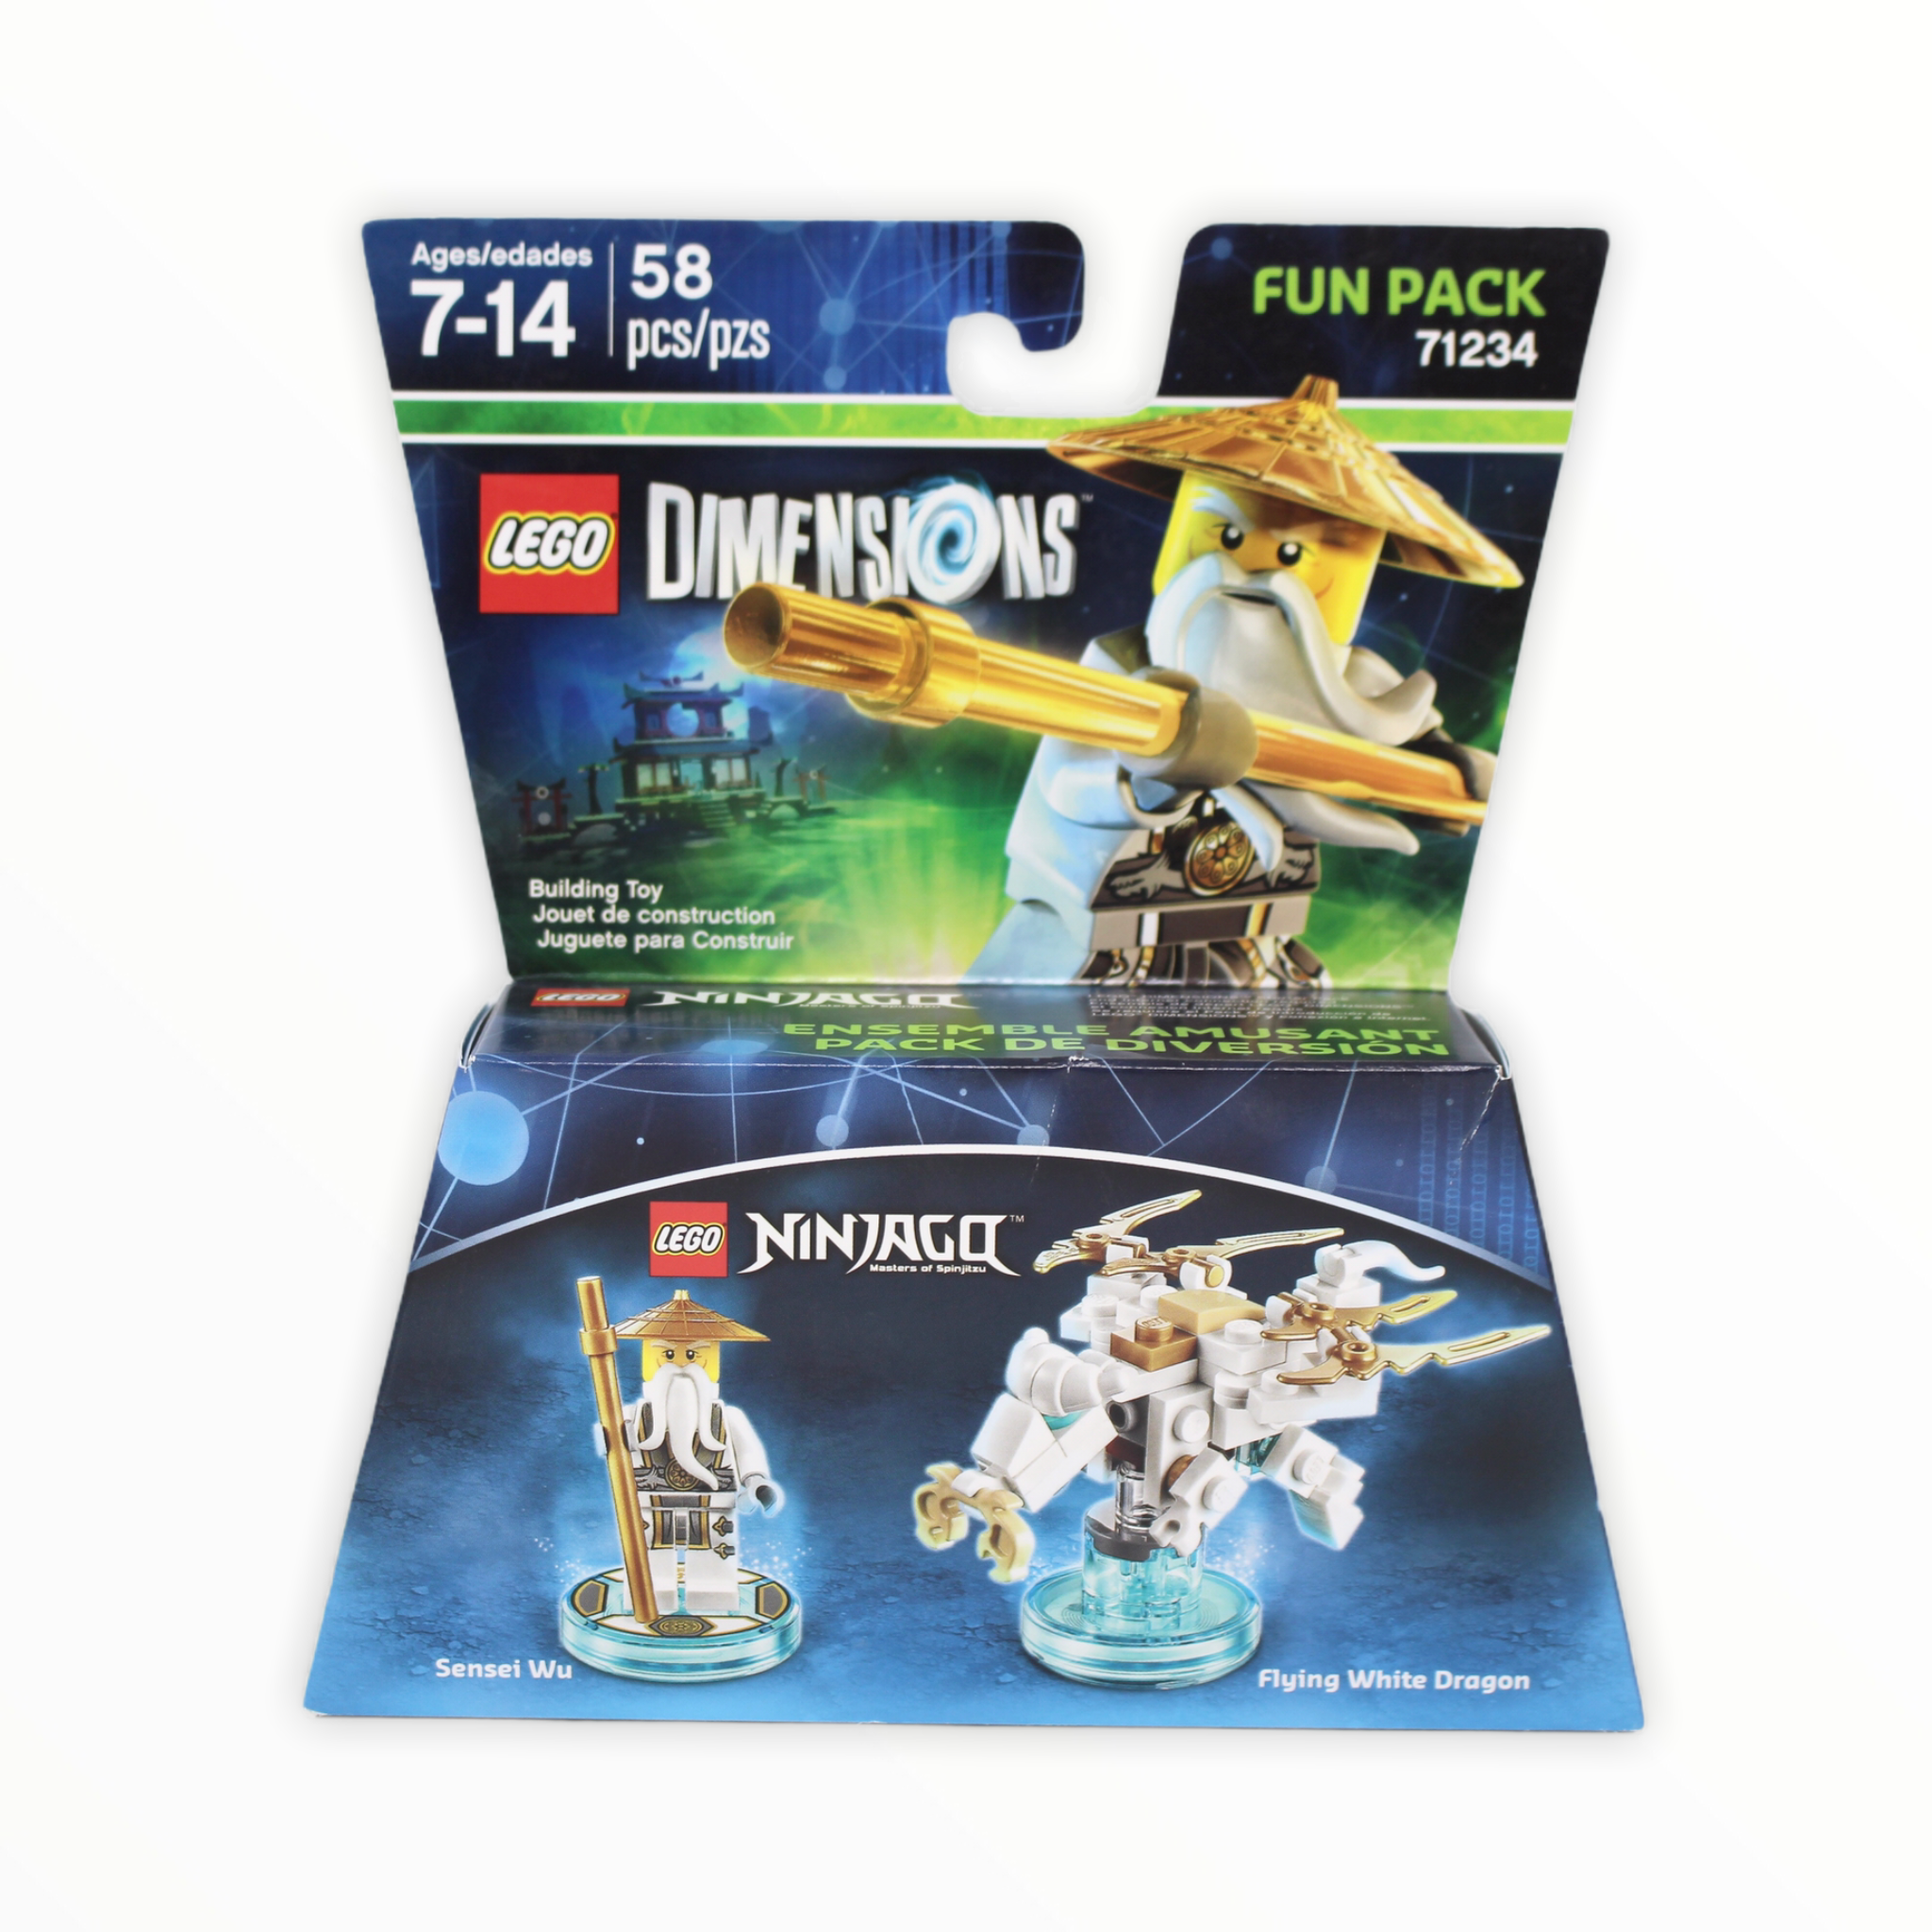 Retired Set 71234 Dimensions Fun Pack - Ninjago Sensei Wu and Flying White Dragon